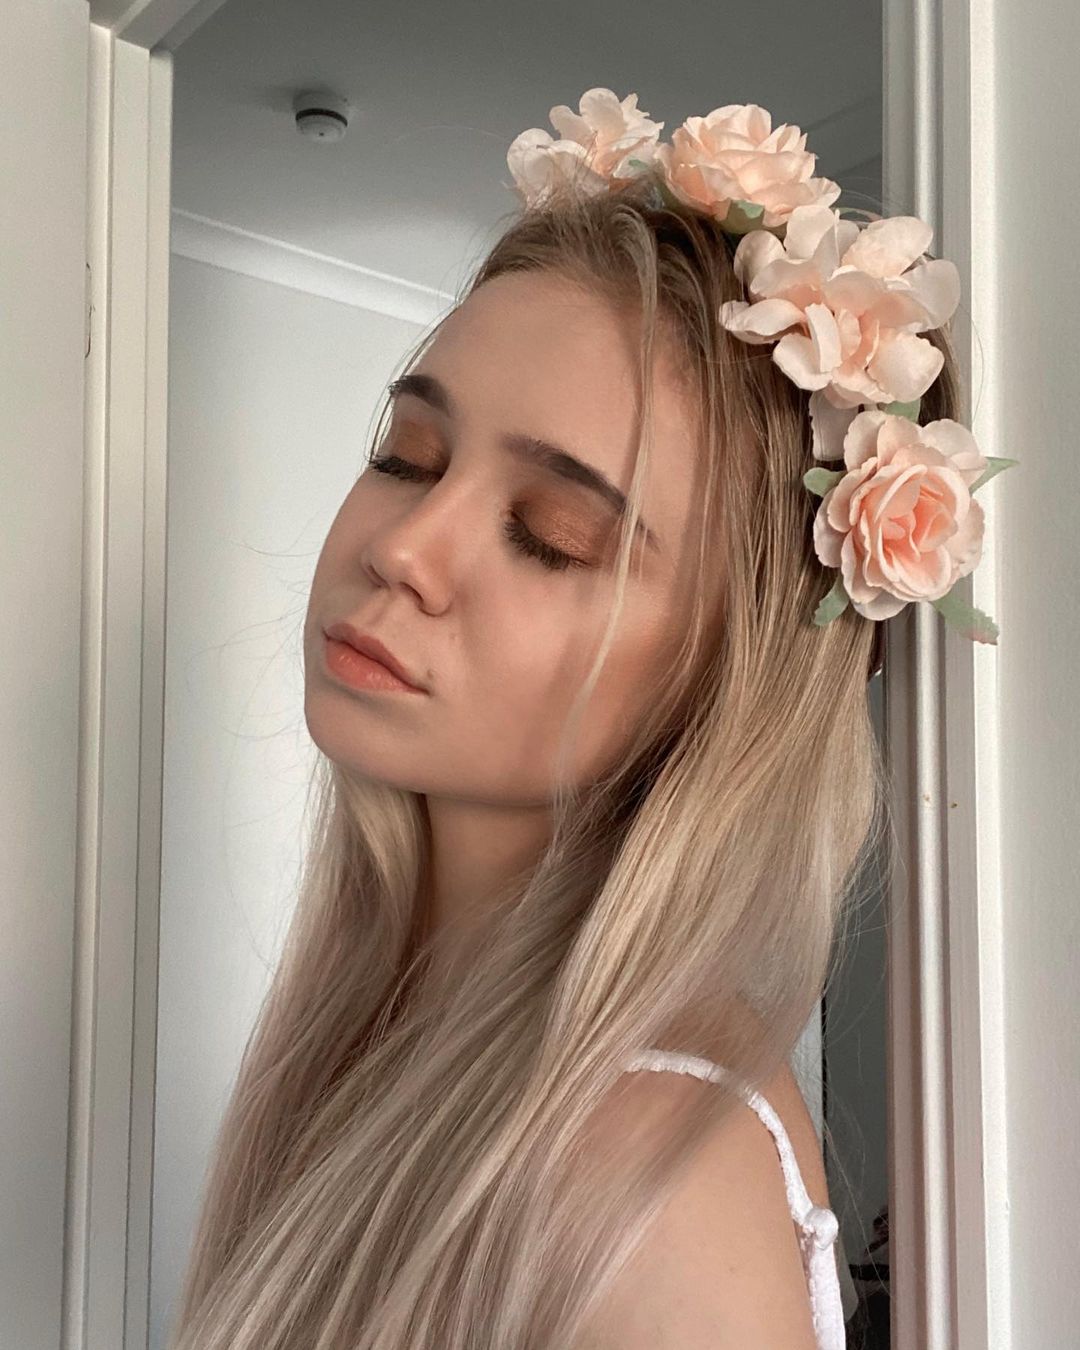 Alisa Goldfinch seen in Flower Hair Band During Instagram Selfie Photos 11/05/2021 1